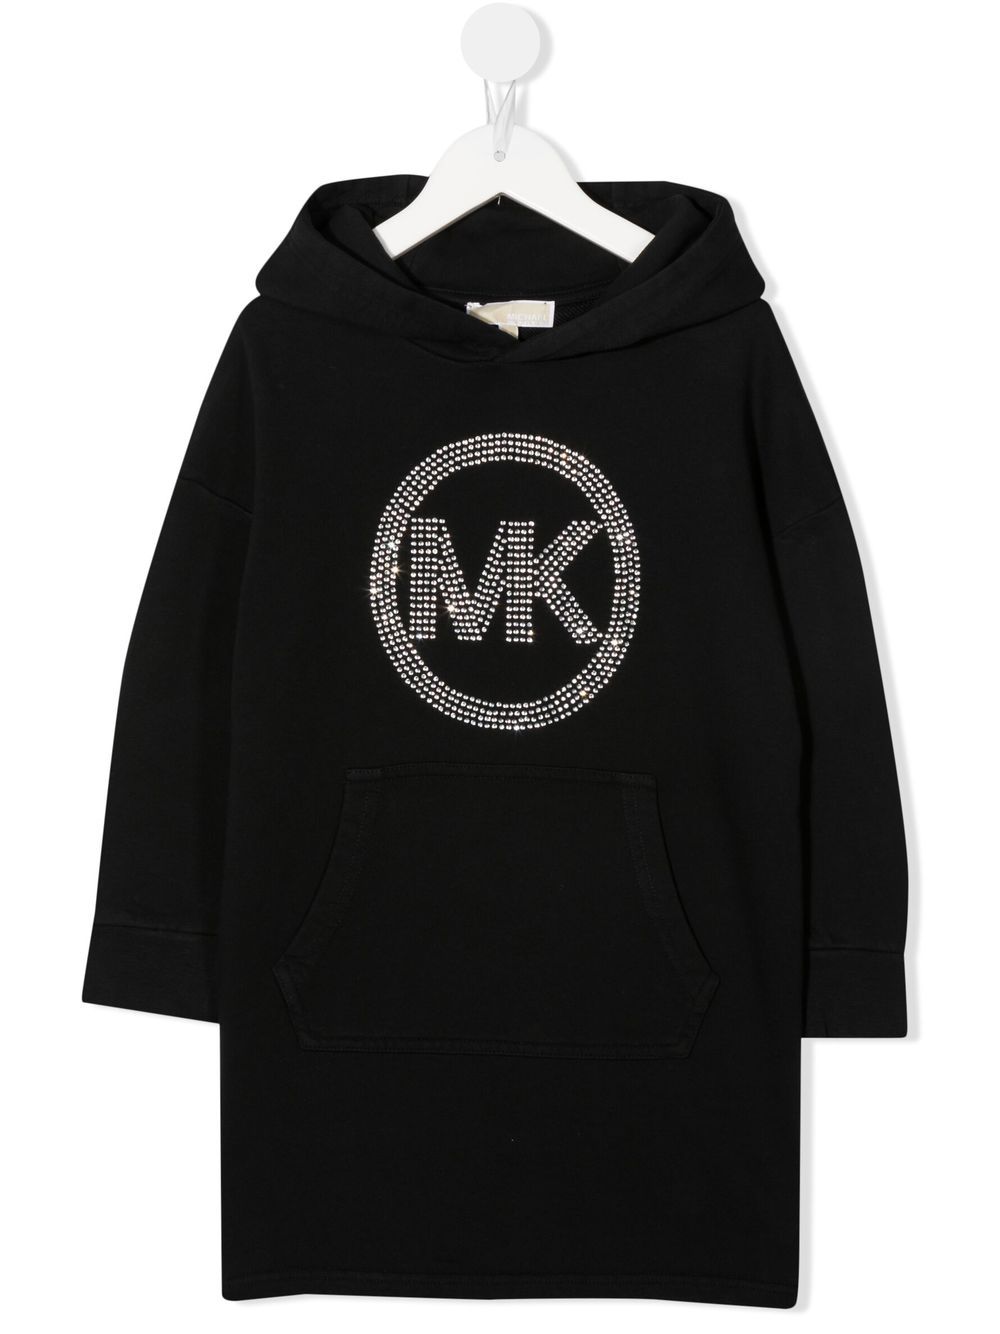 MICHAEL KORS Girls Black Chain Logo Dress